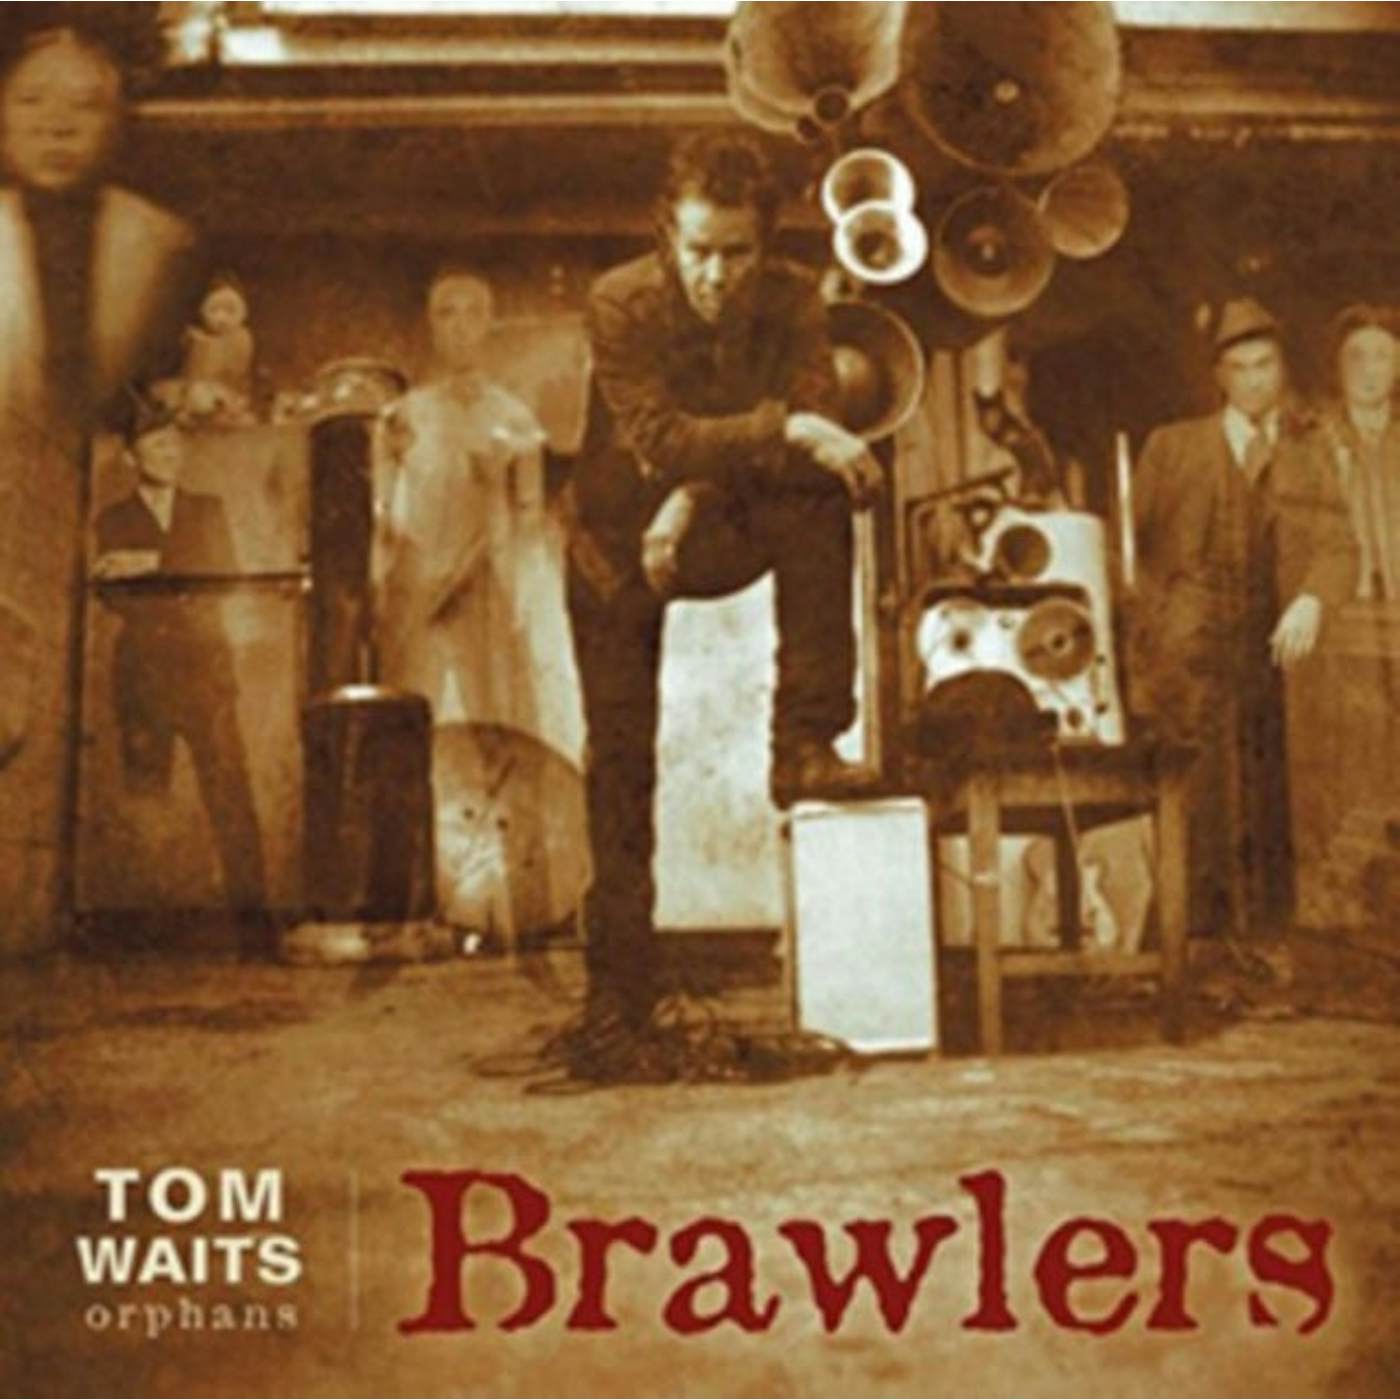 Tom Waits LP Vinyl Record - Brawlers (Remastered Edition)